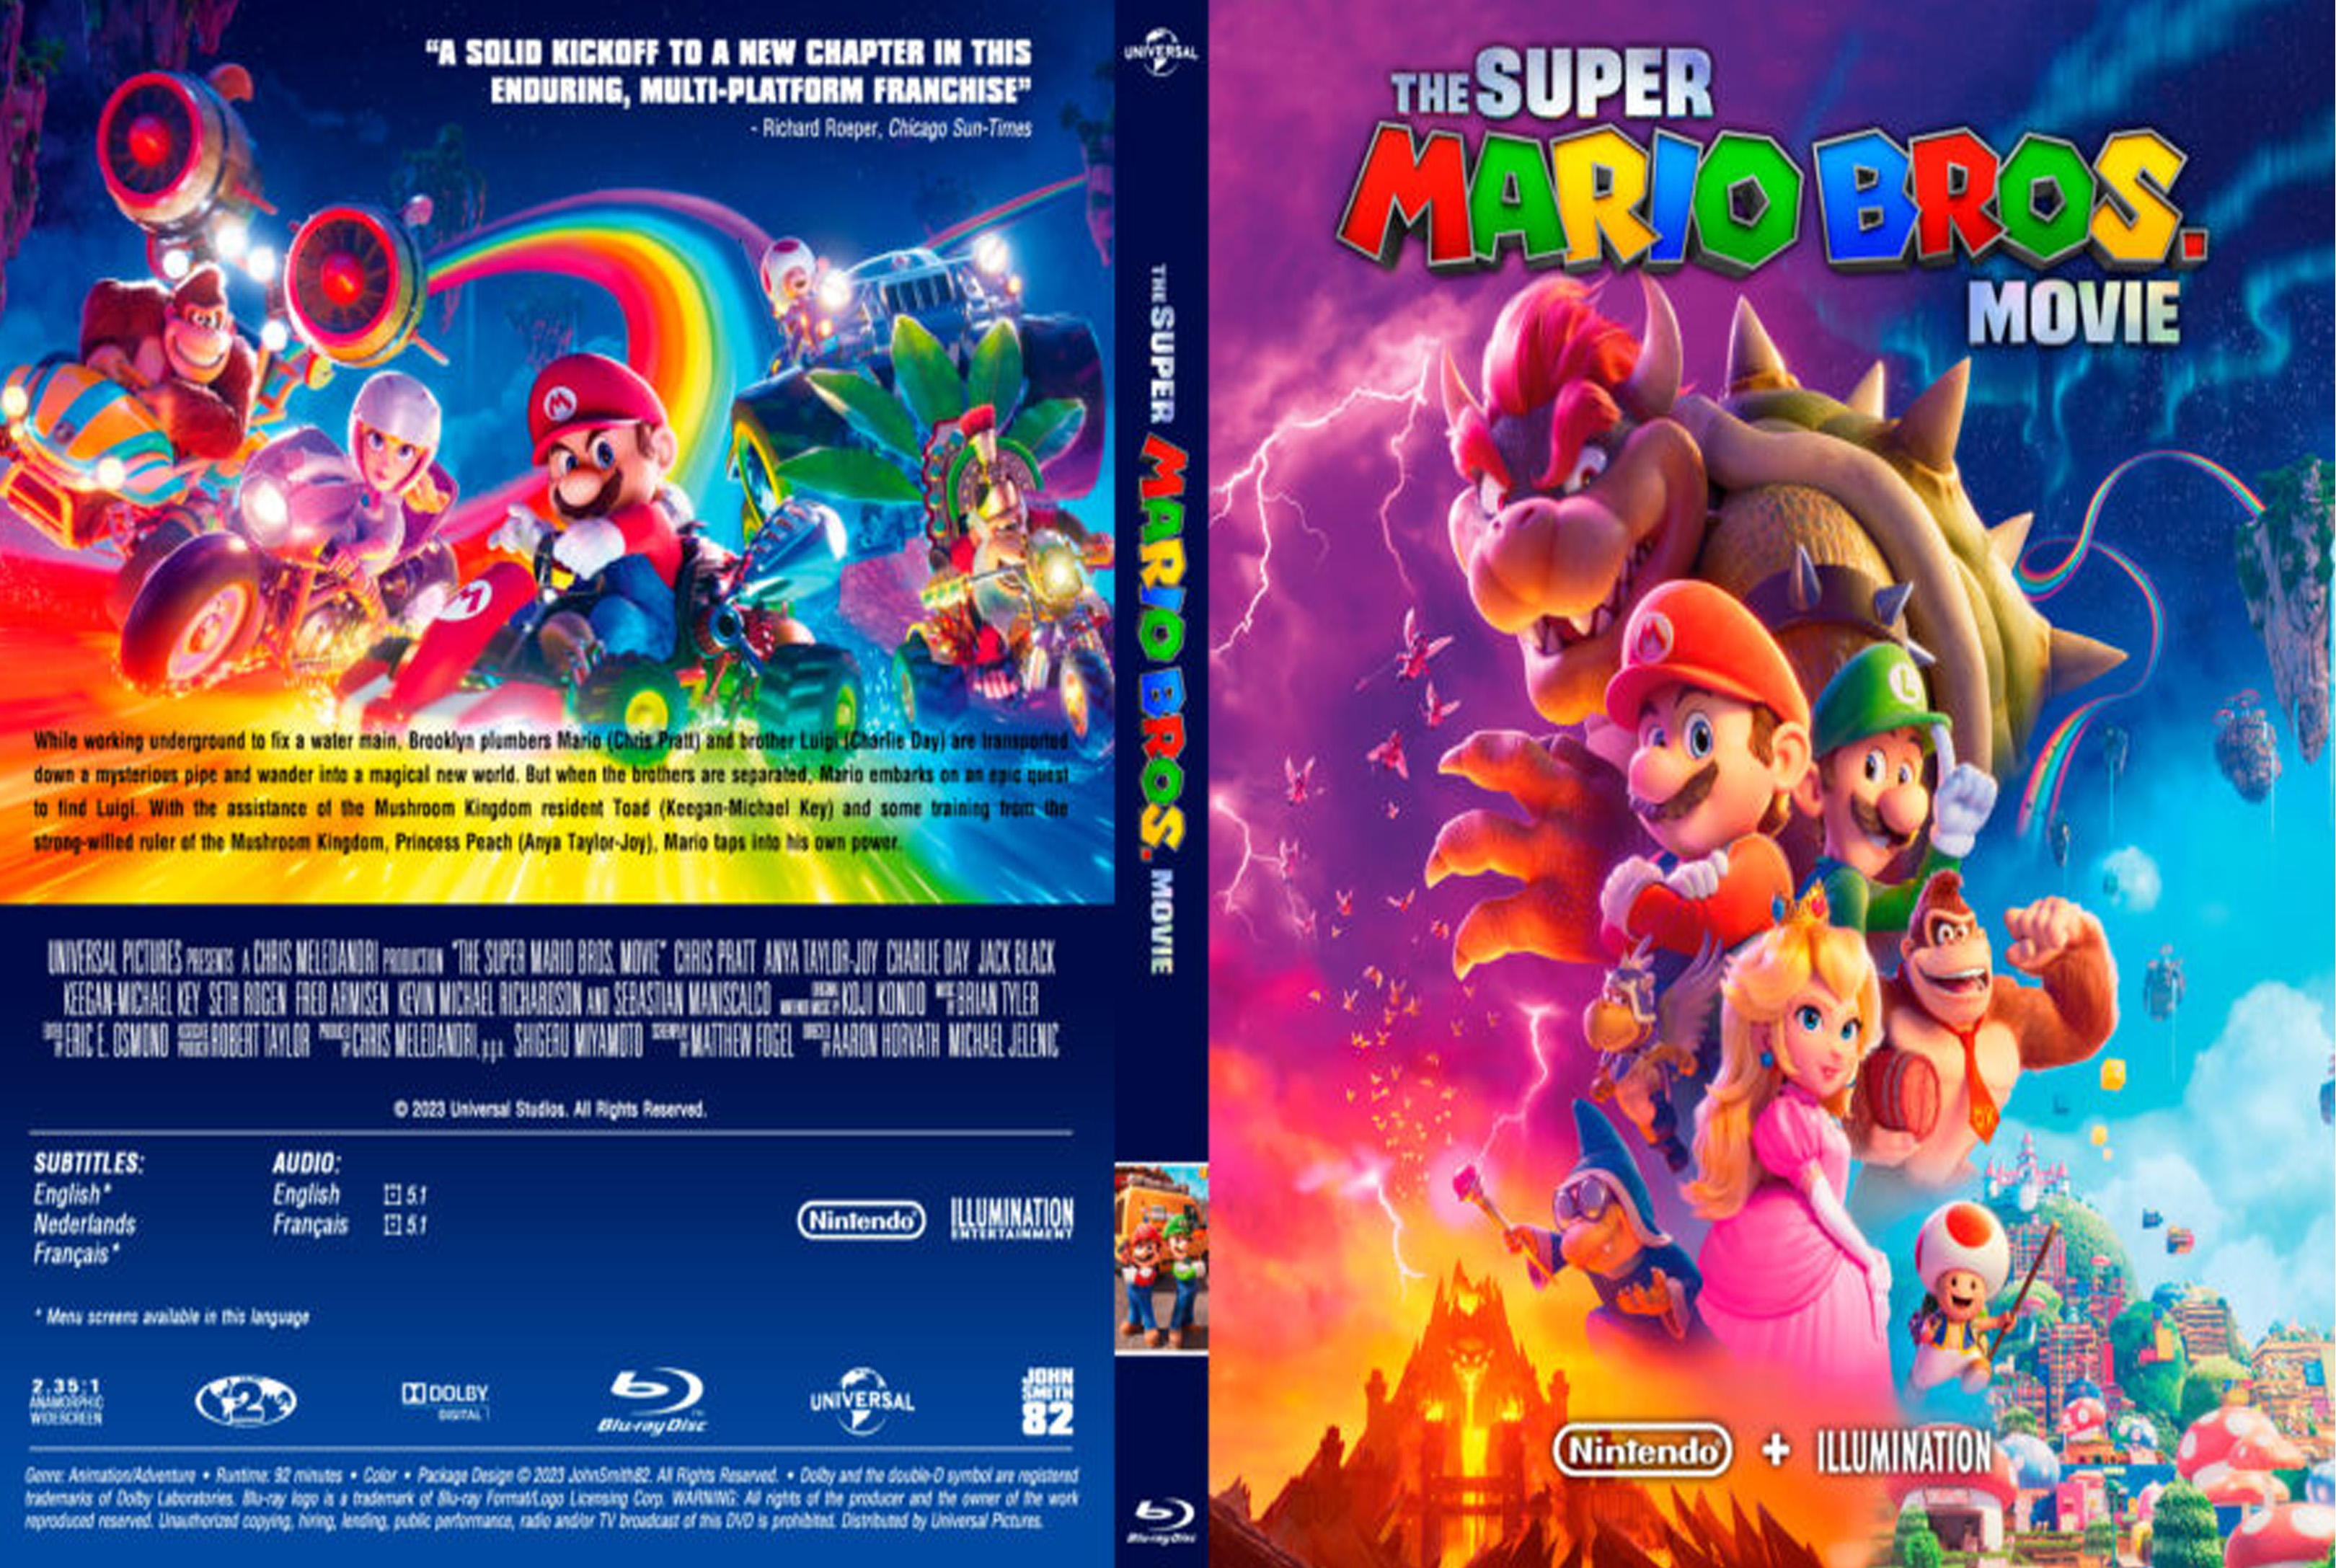 Super Mario Bros O Filme DVD 2023